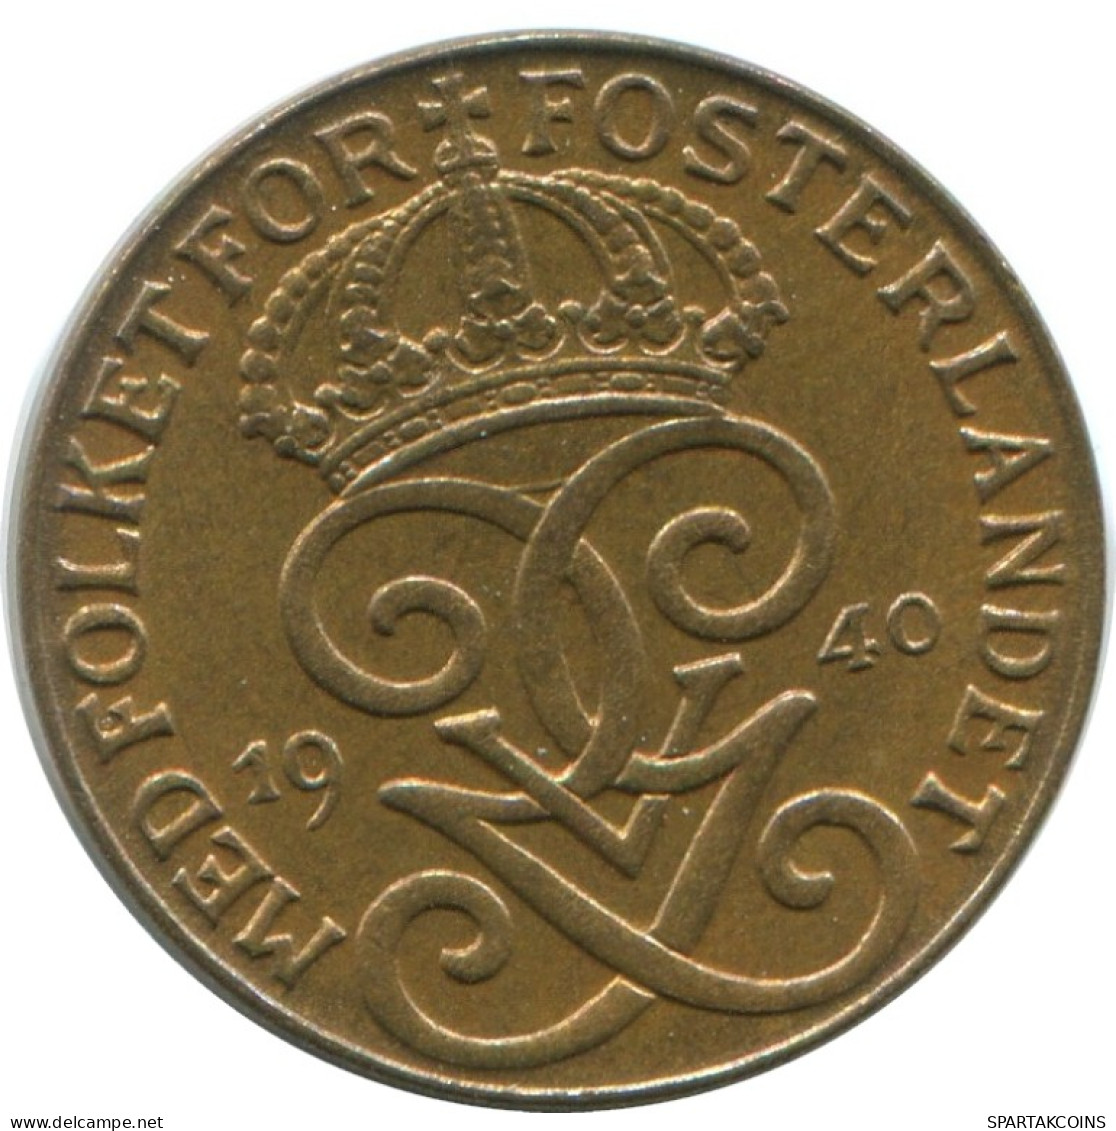 1 ORE 1940 SWEDEN Coin #AD365.2.U.A - Sweden